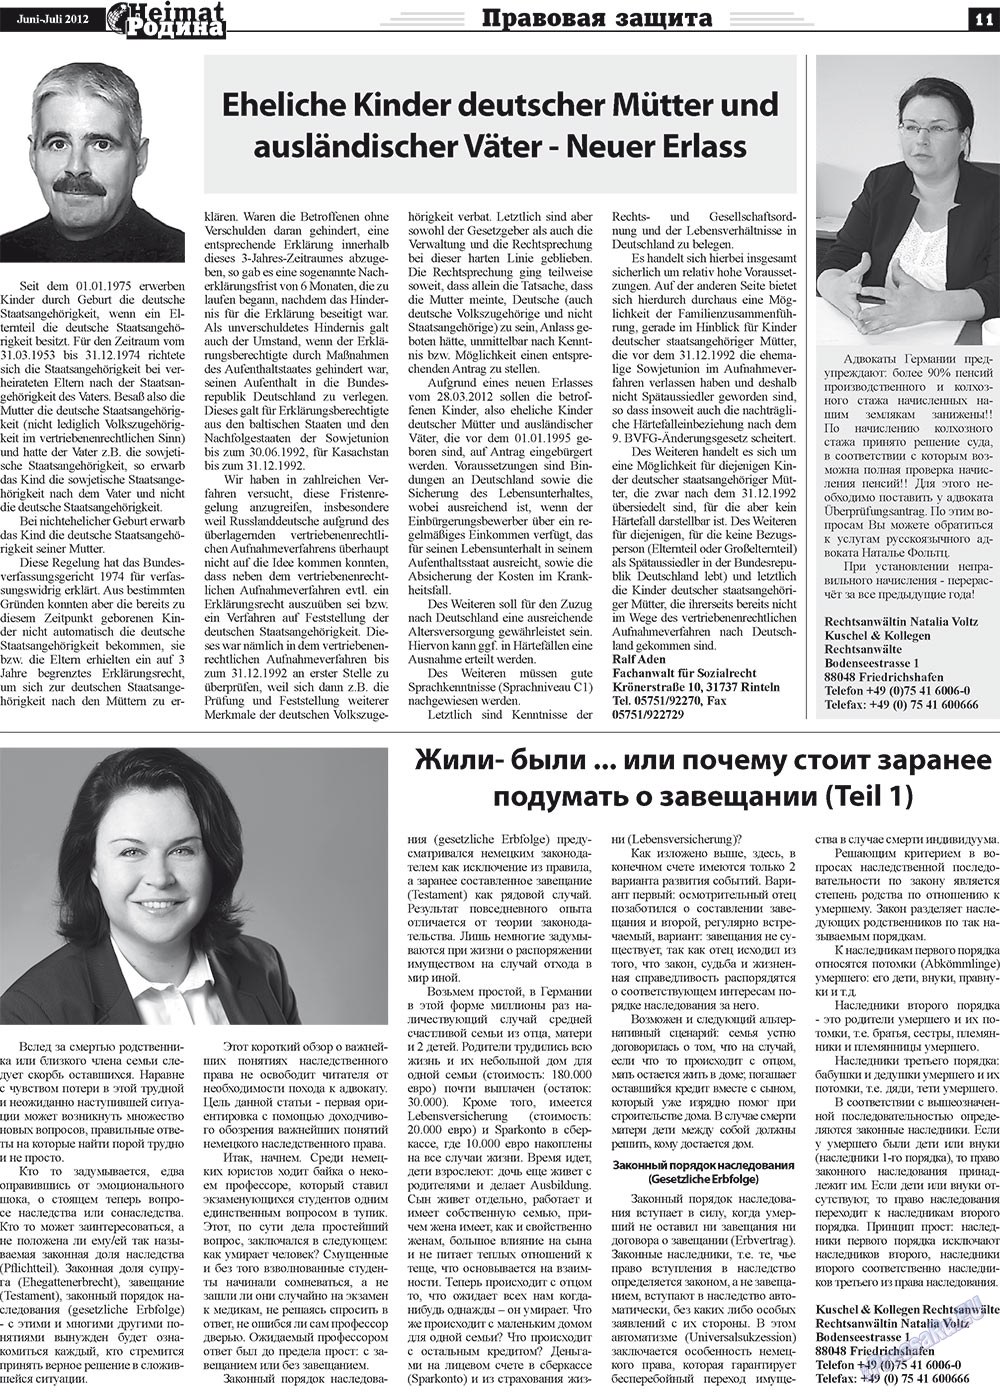 Heimat-Родина, газета. 2012 №5 стр.11